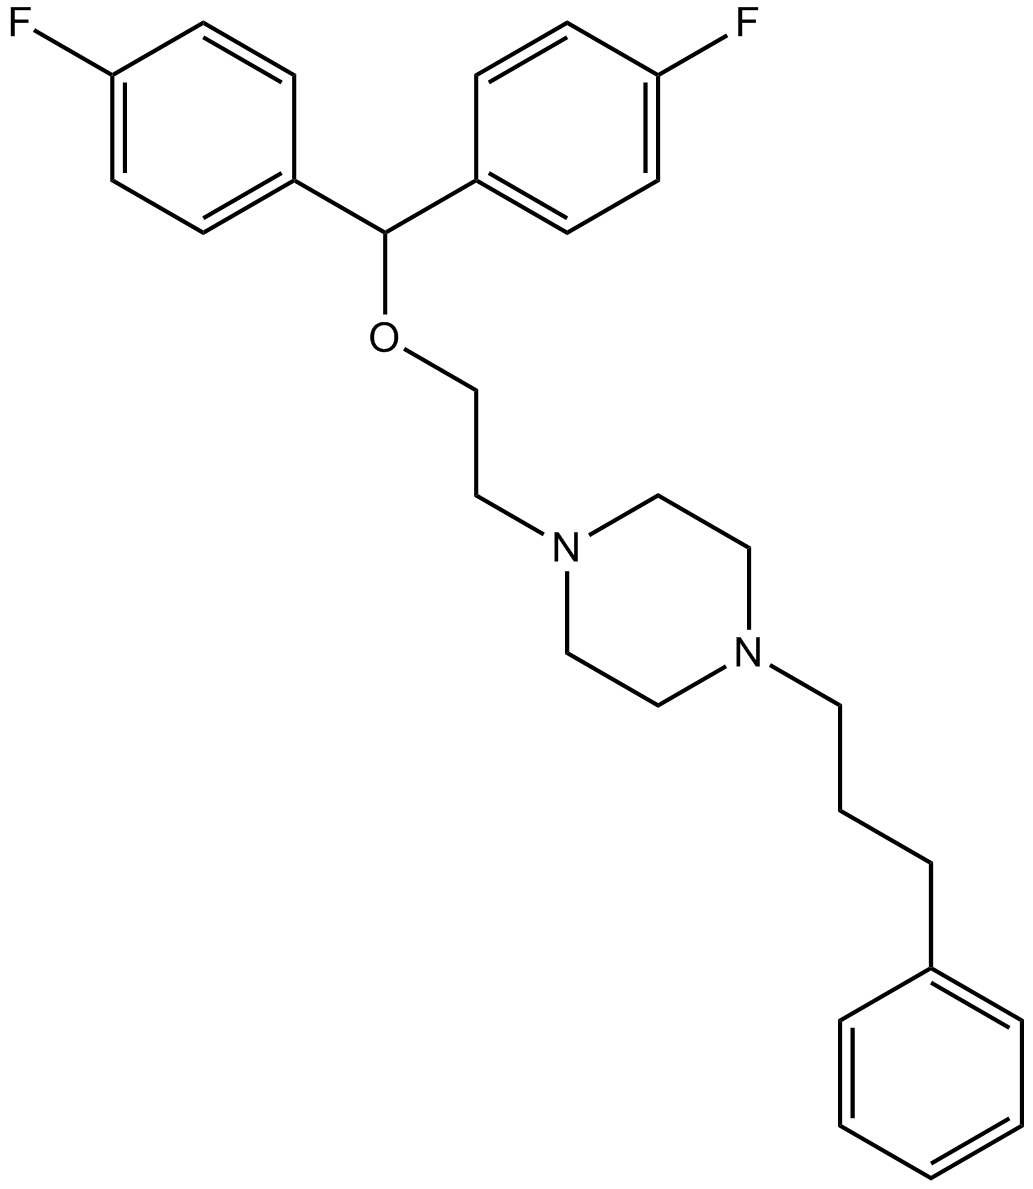 Vanoxerine Chemical Structure